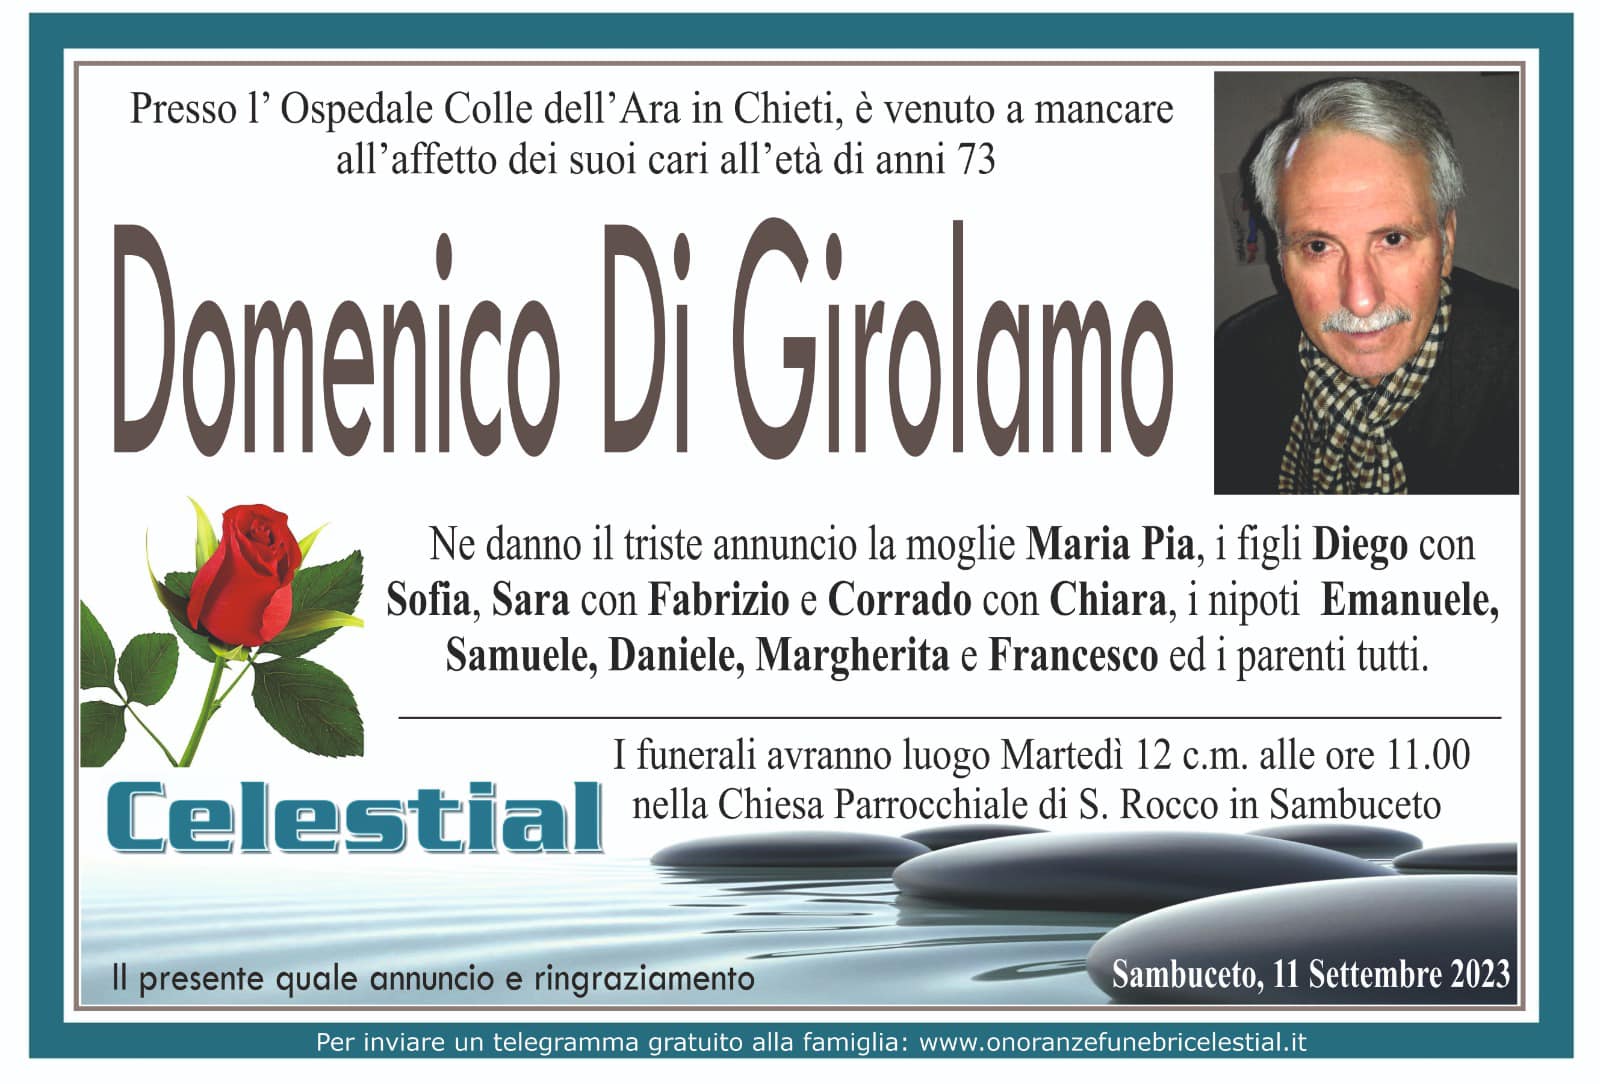 Domenico Di Girolamo